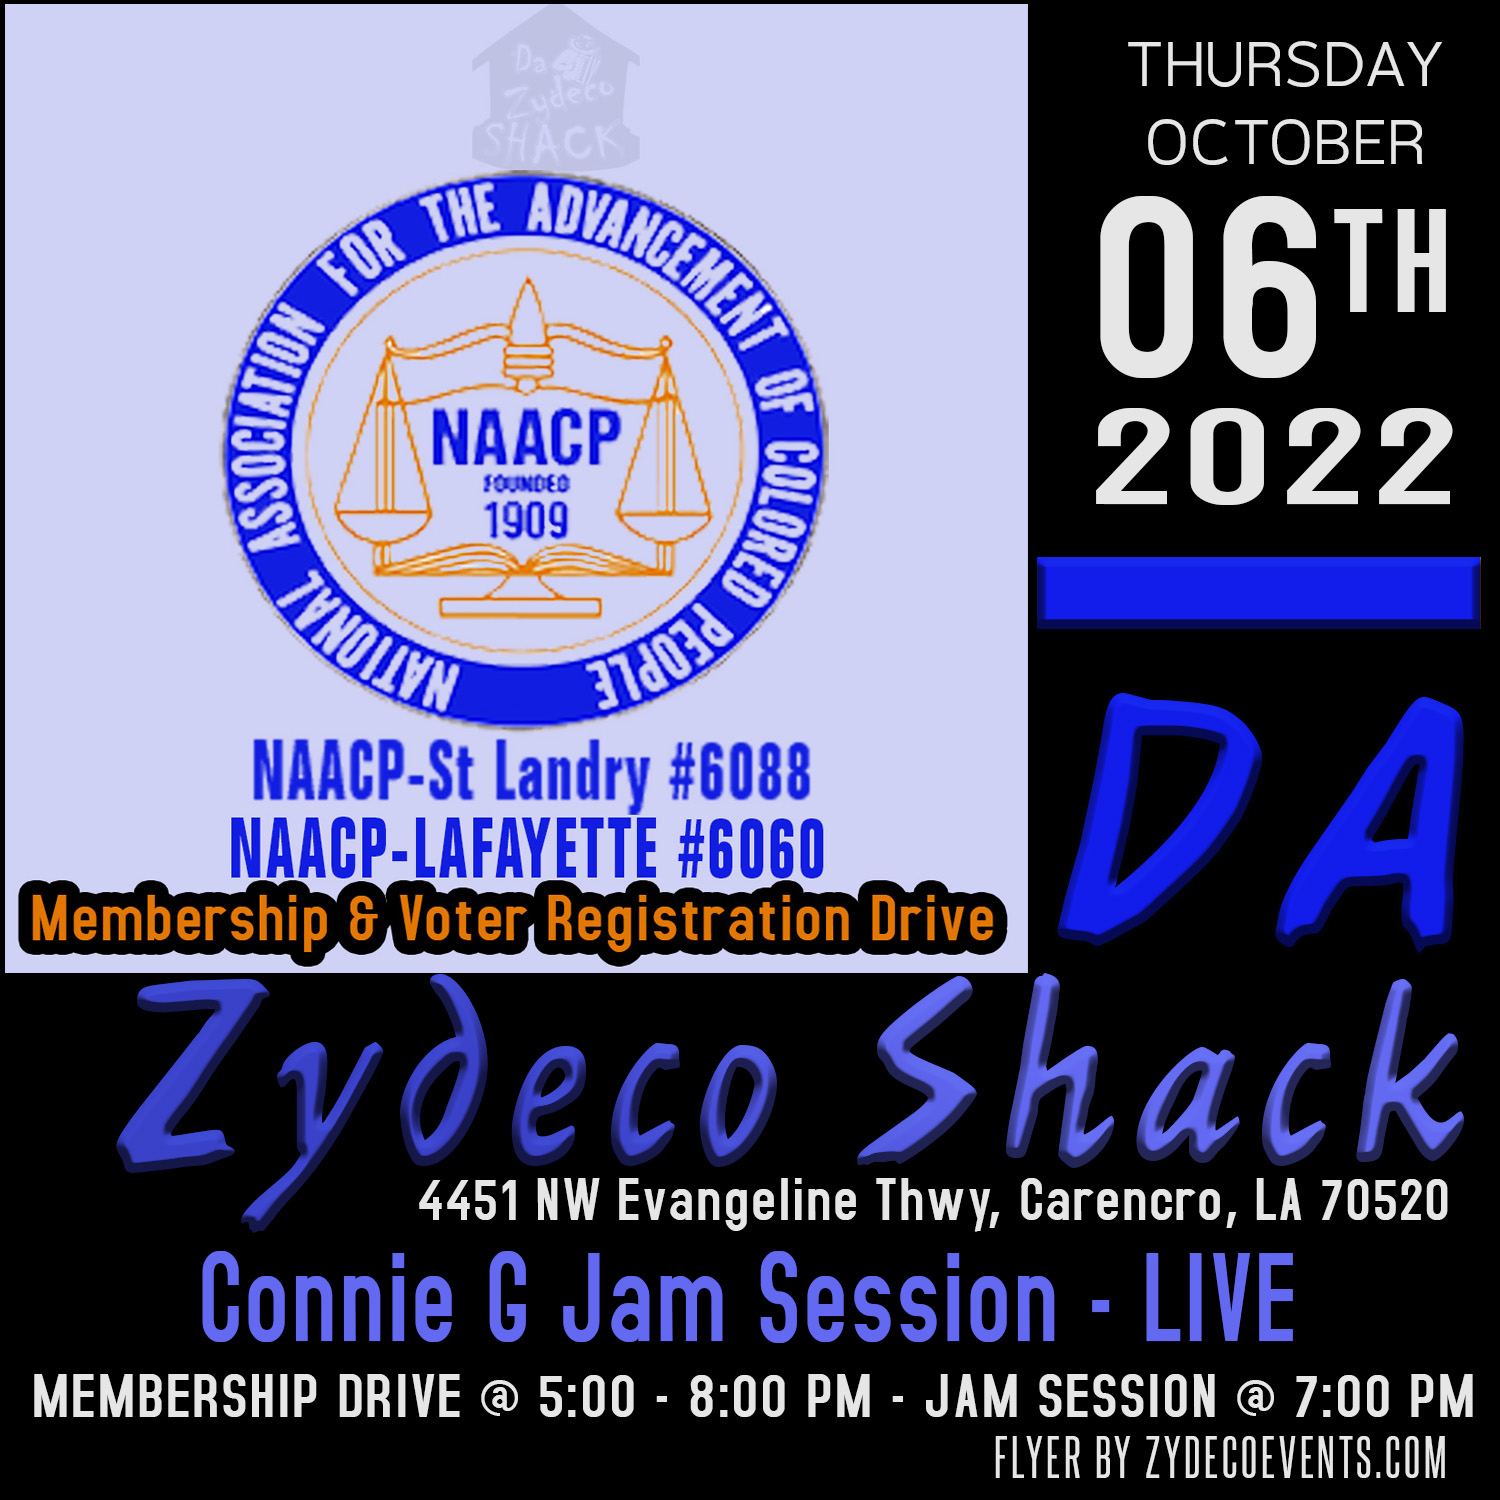 NAACP - St Landry & Lafayette - Membership Drive & Jam Session @ Da Zydeco Shack